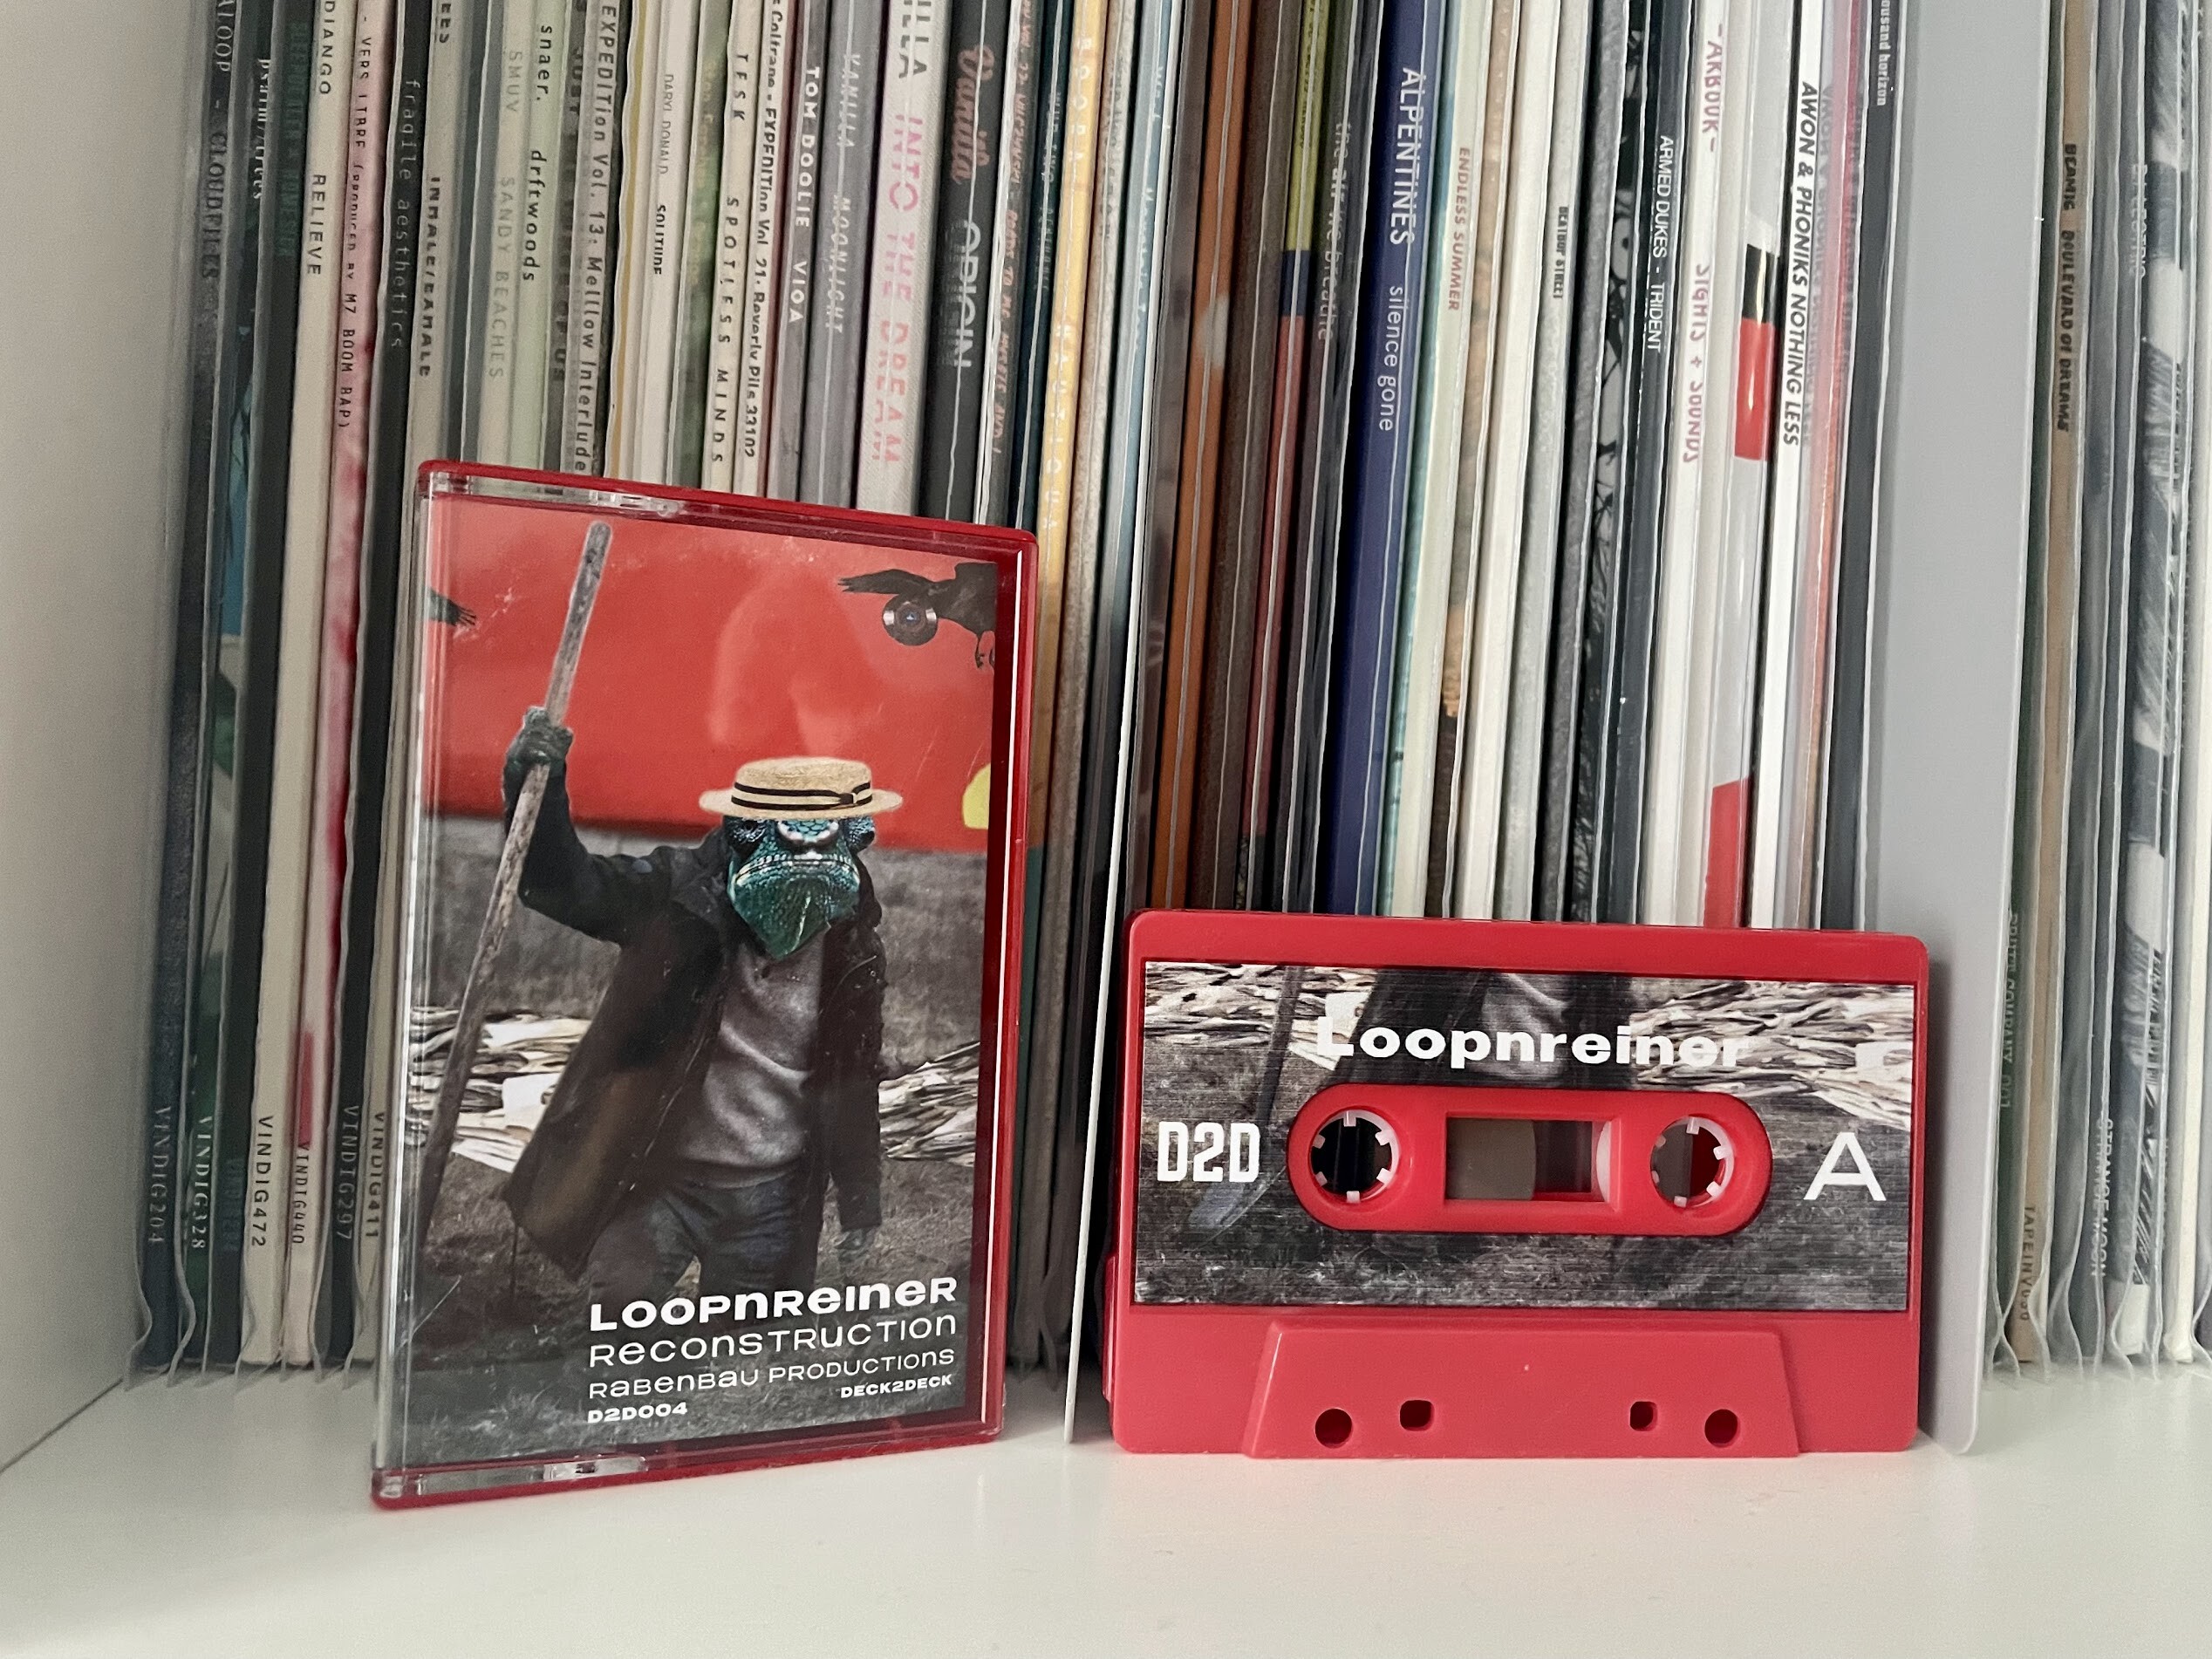 Loopnreiner - Reconstruction (Deck 2 Deck Records)